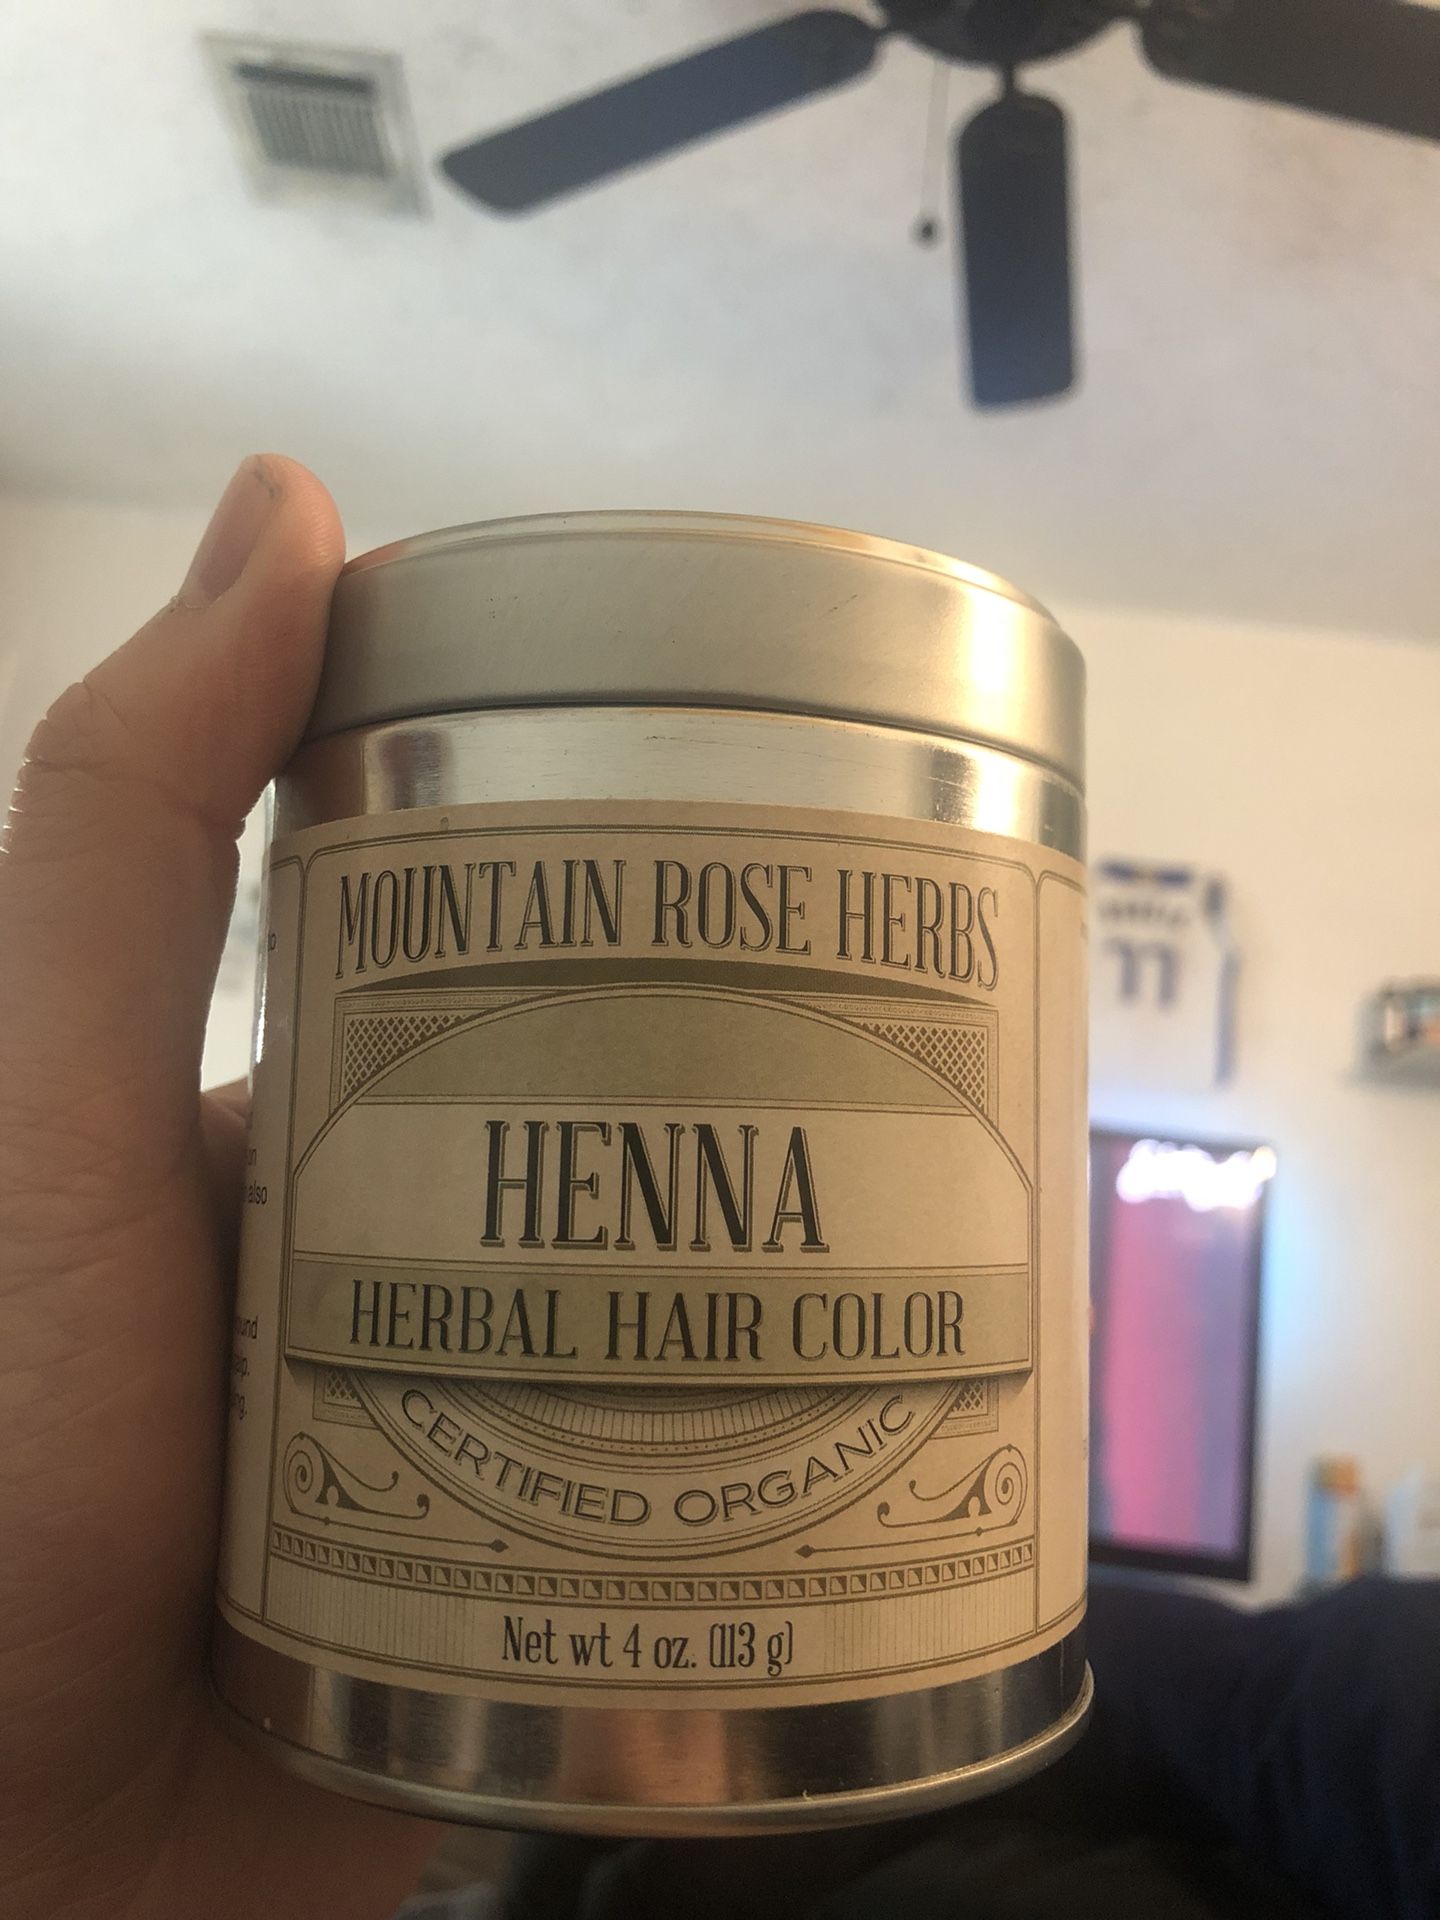 Mountain Rose Herbs Henna Herbal Hair Color